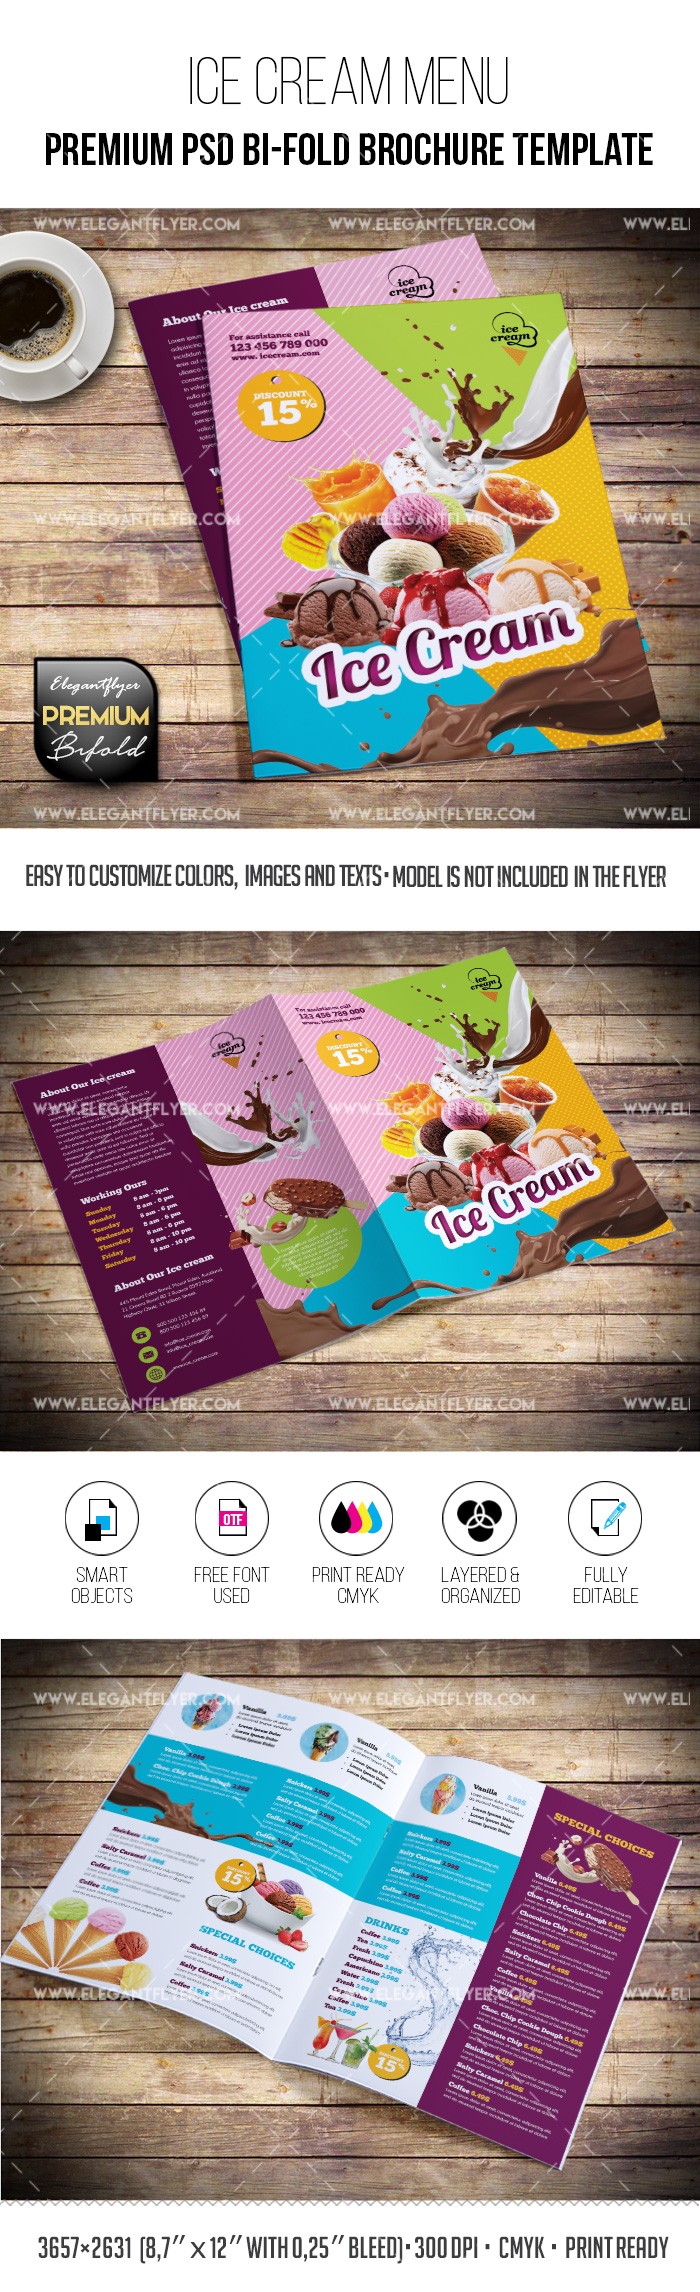 Ice Cream Menu – Premium PSD Bi-Fold Brochure Template by ElegantFlyer